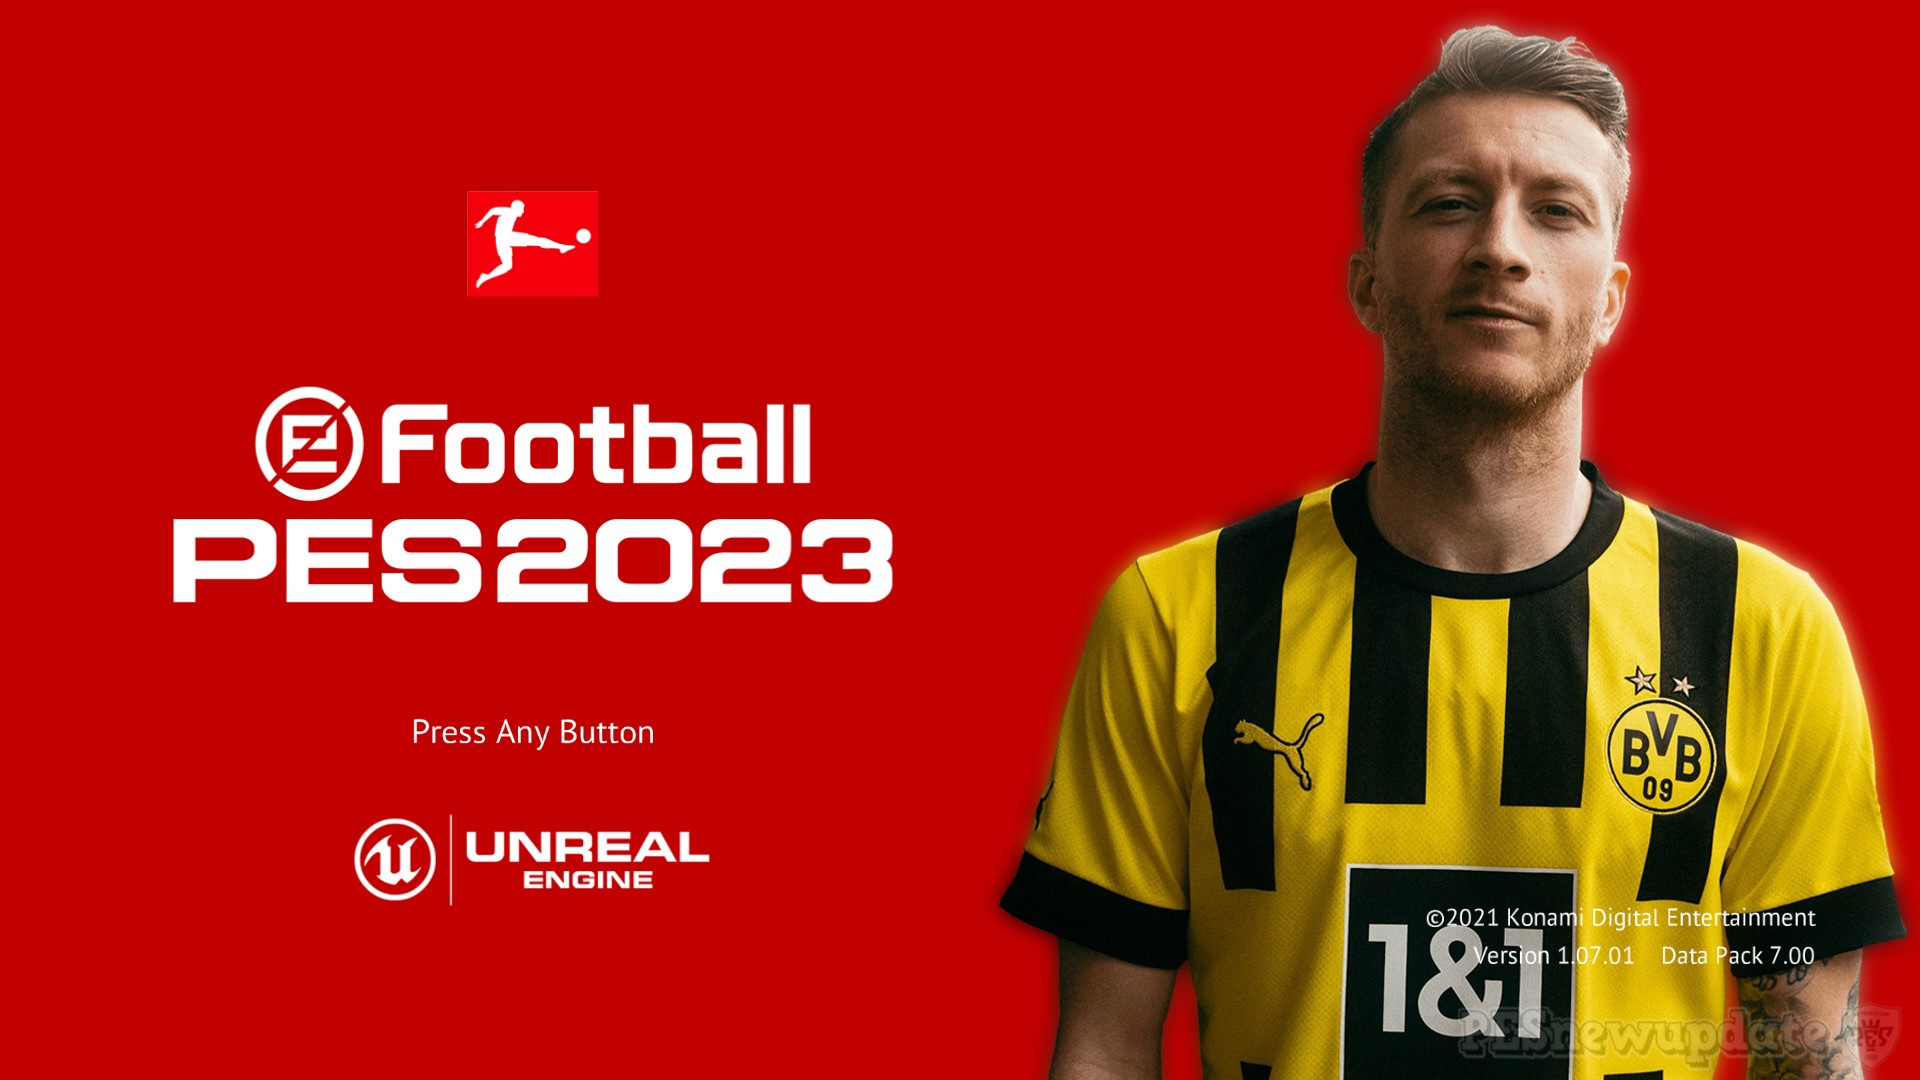 PES 2021 Menu Bundesliga 2022 2023 By PESNewupdate PESNewupdate.com. Free Download Latest Pro Evolution Soccer Patch & Updates